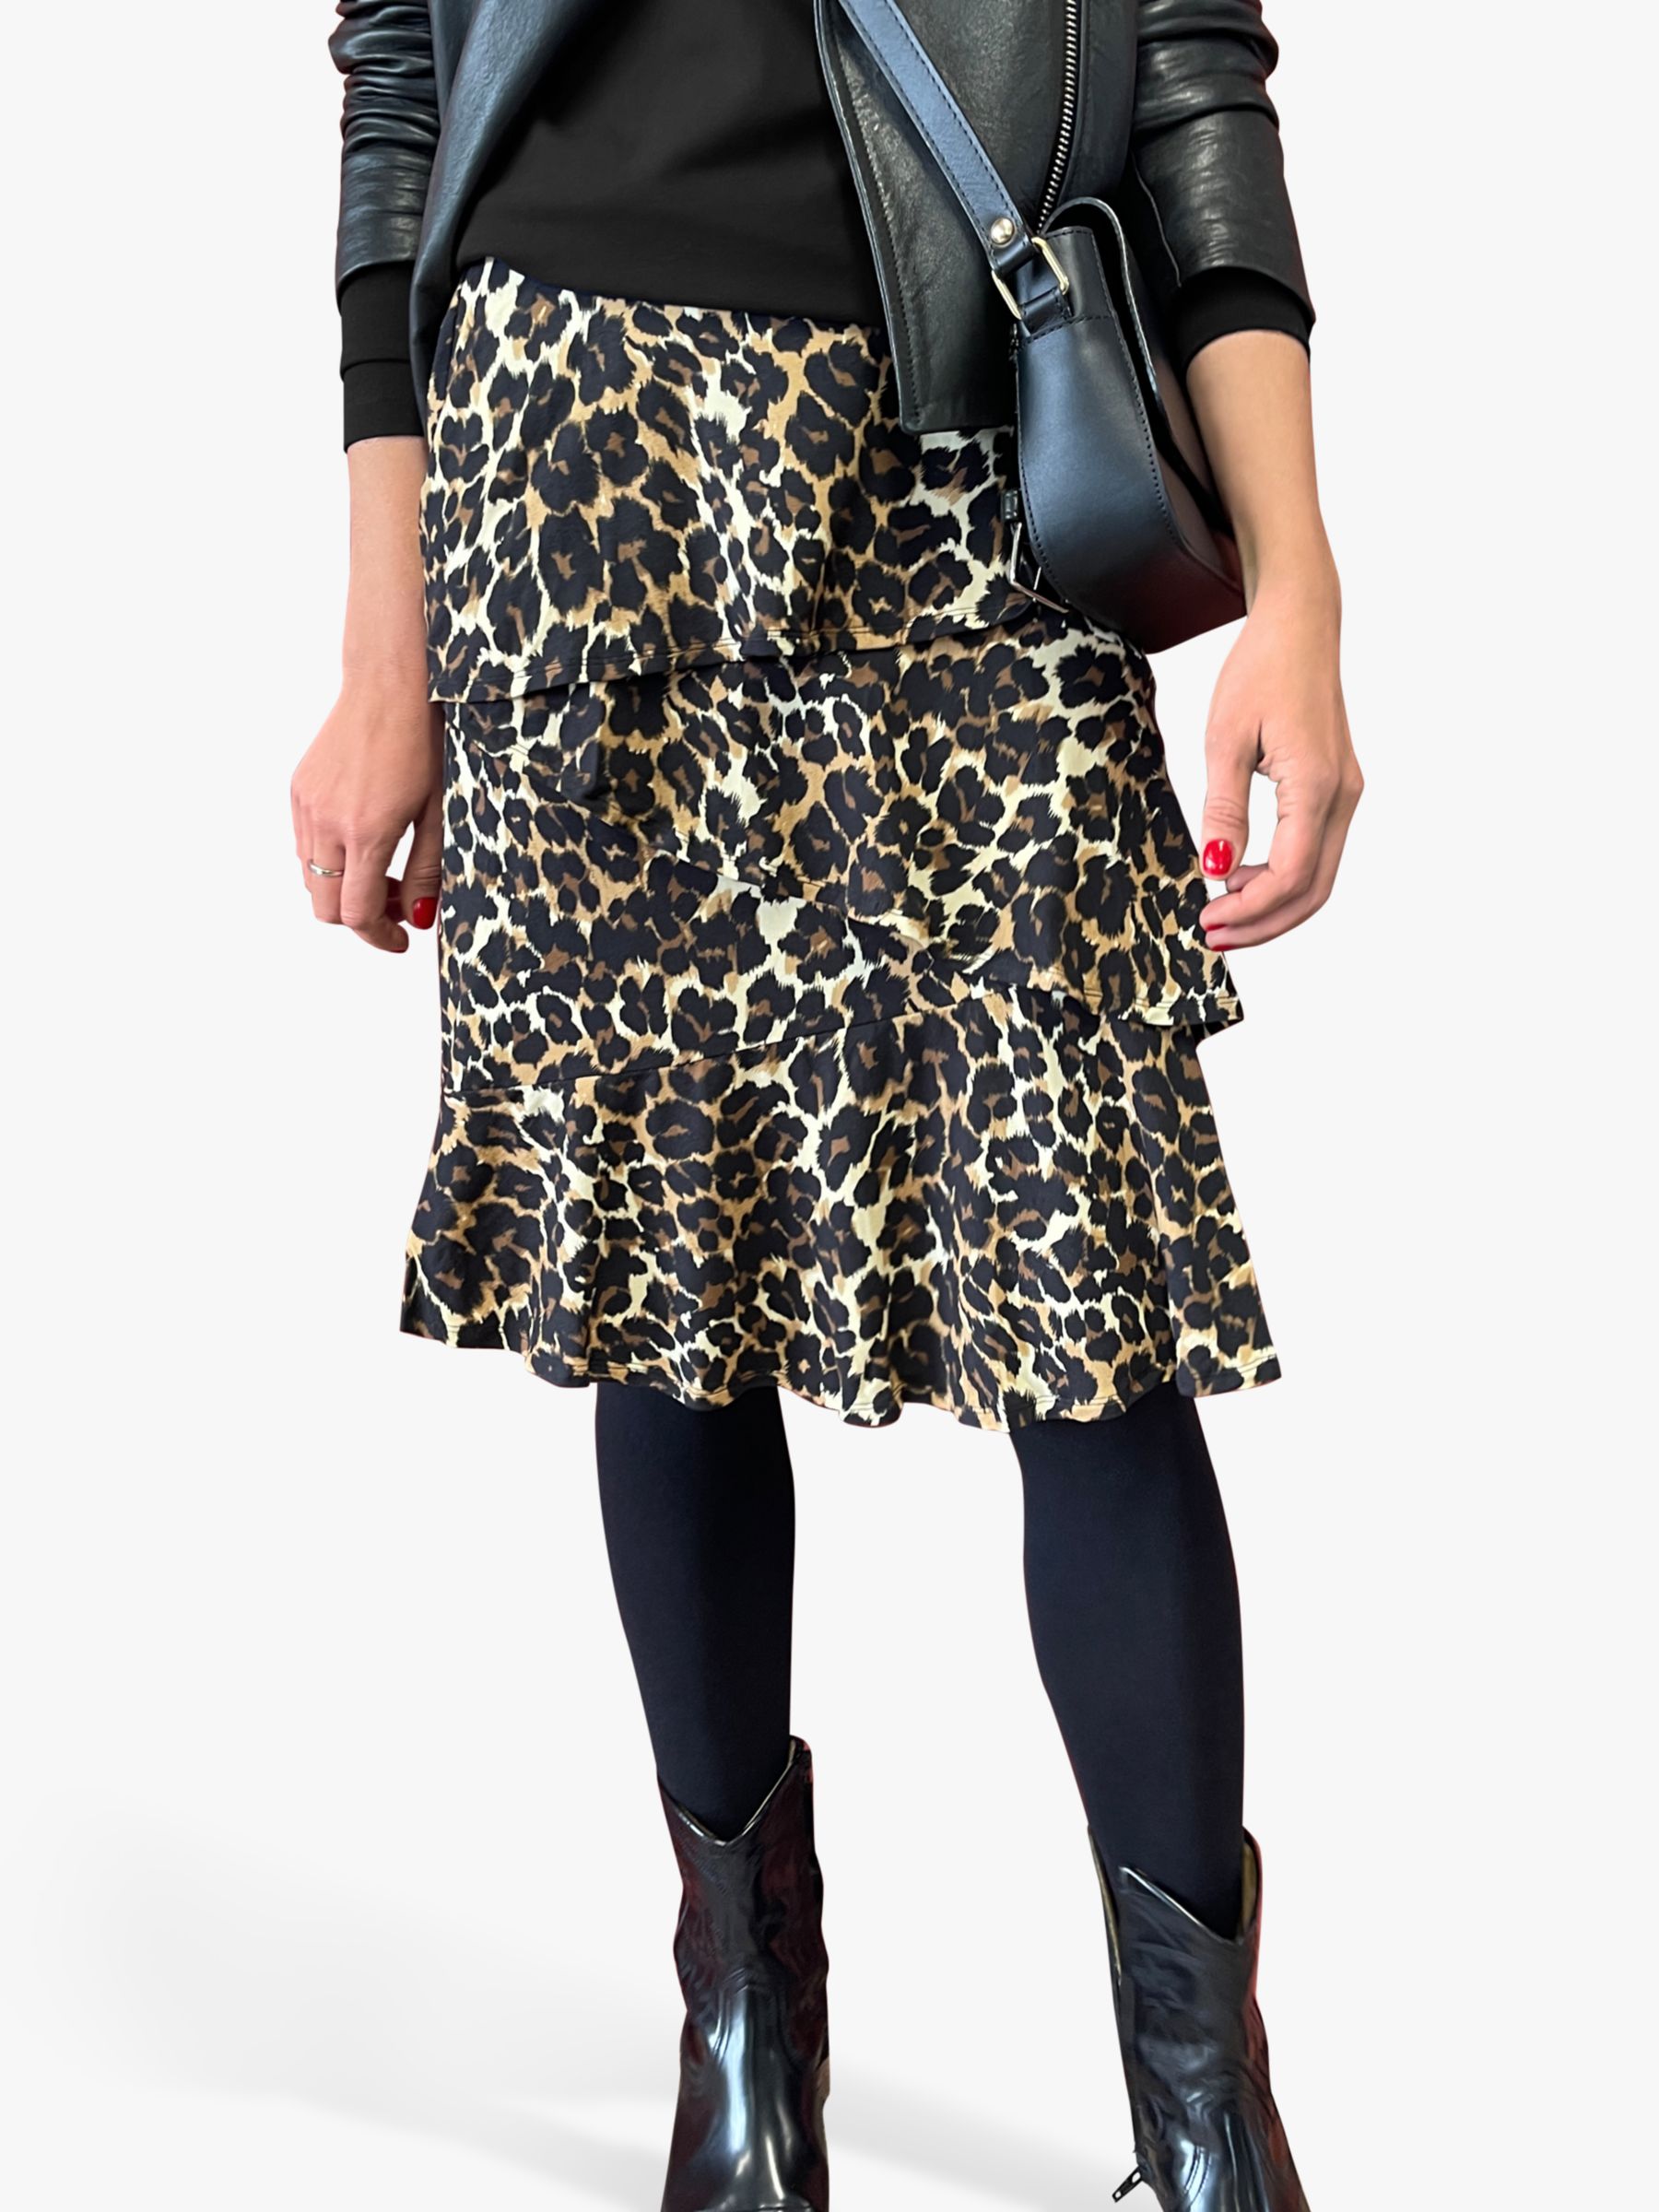 Baukjen Abigail Leopard Print Ruffle Skirt, Multi